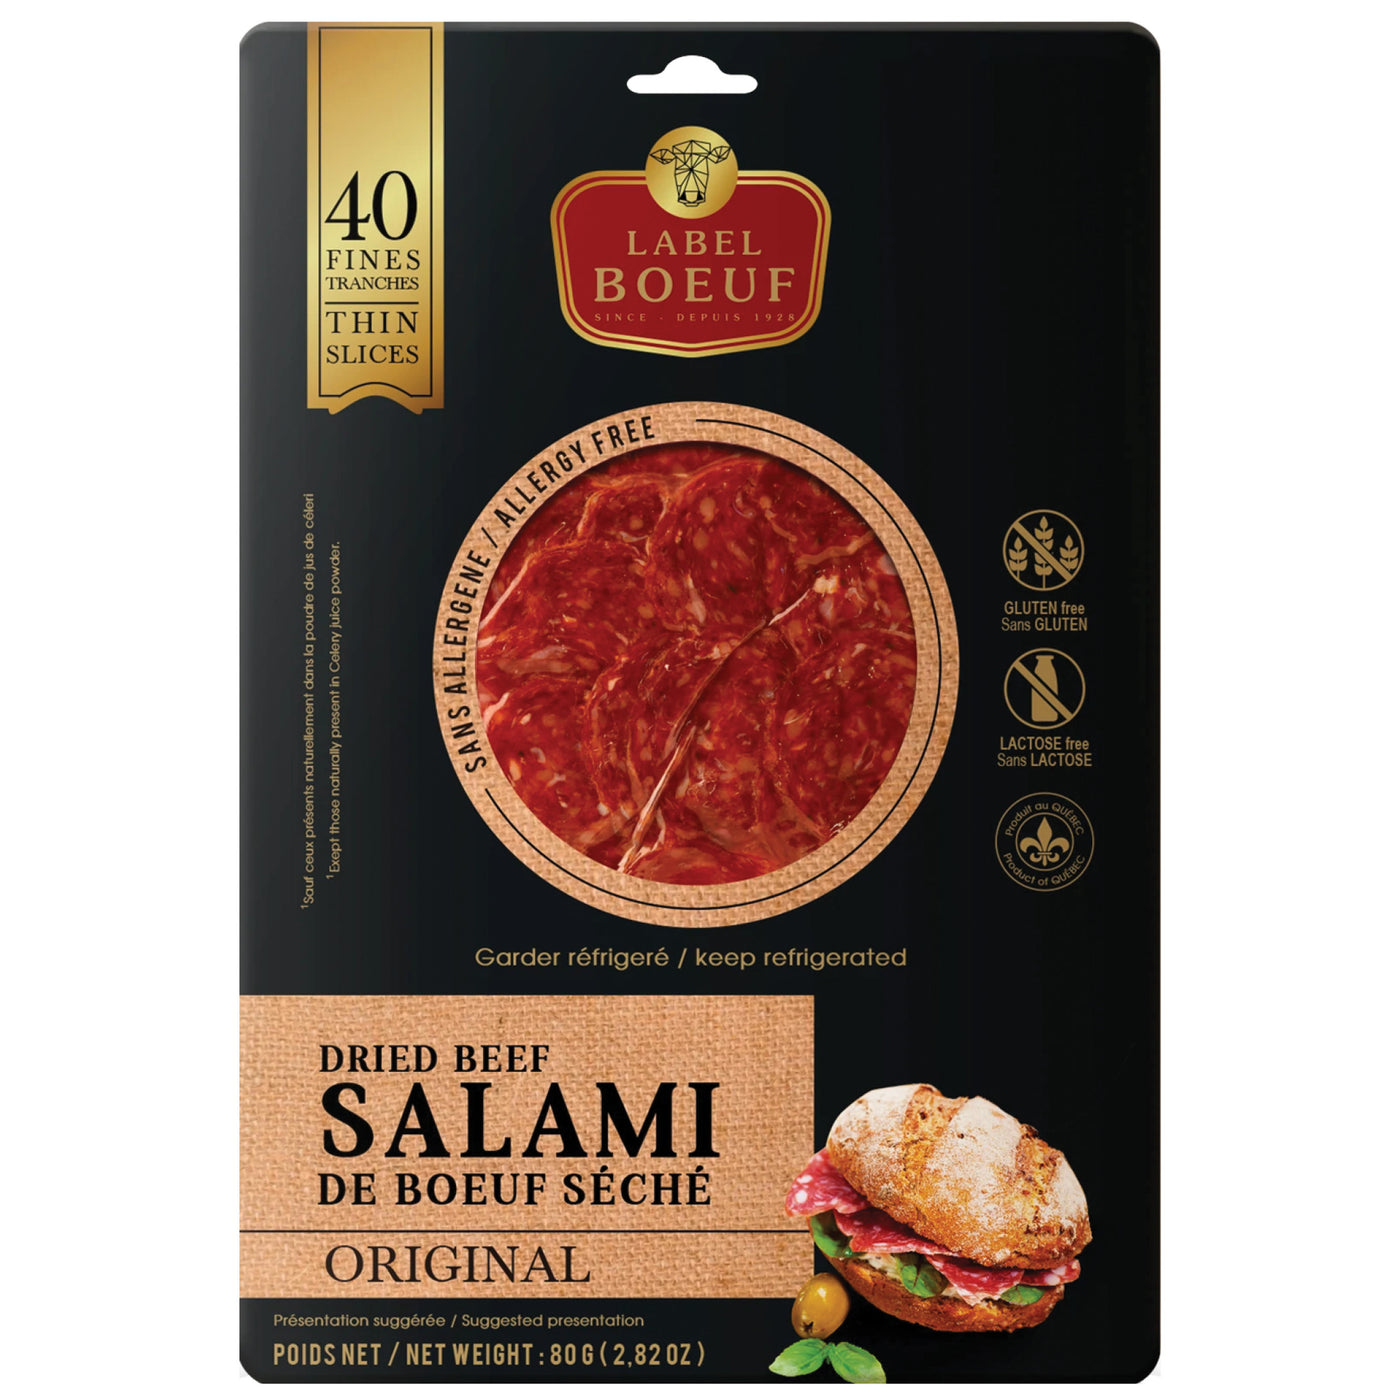 Dried Beef Salami